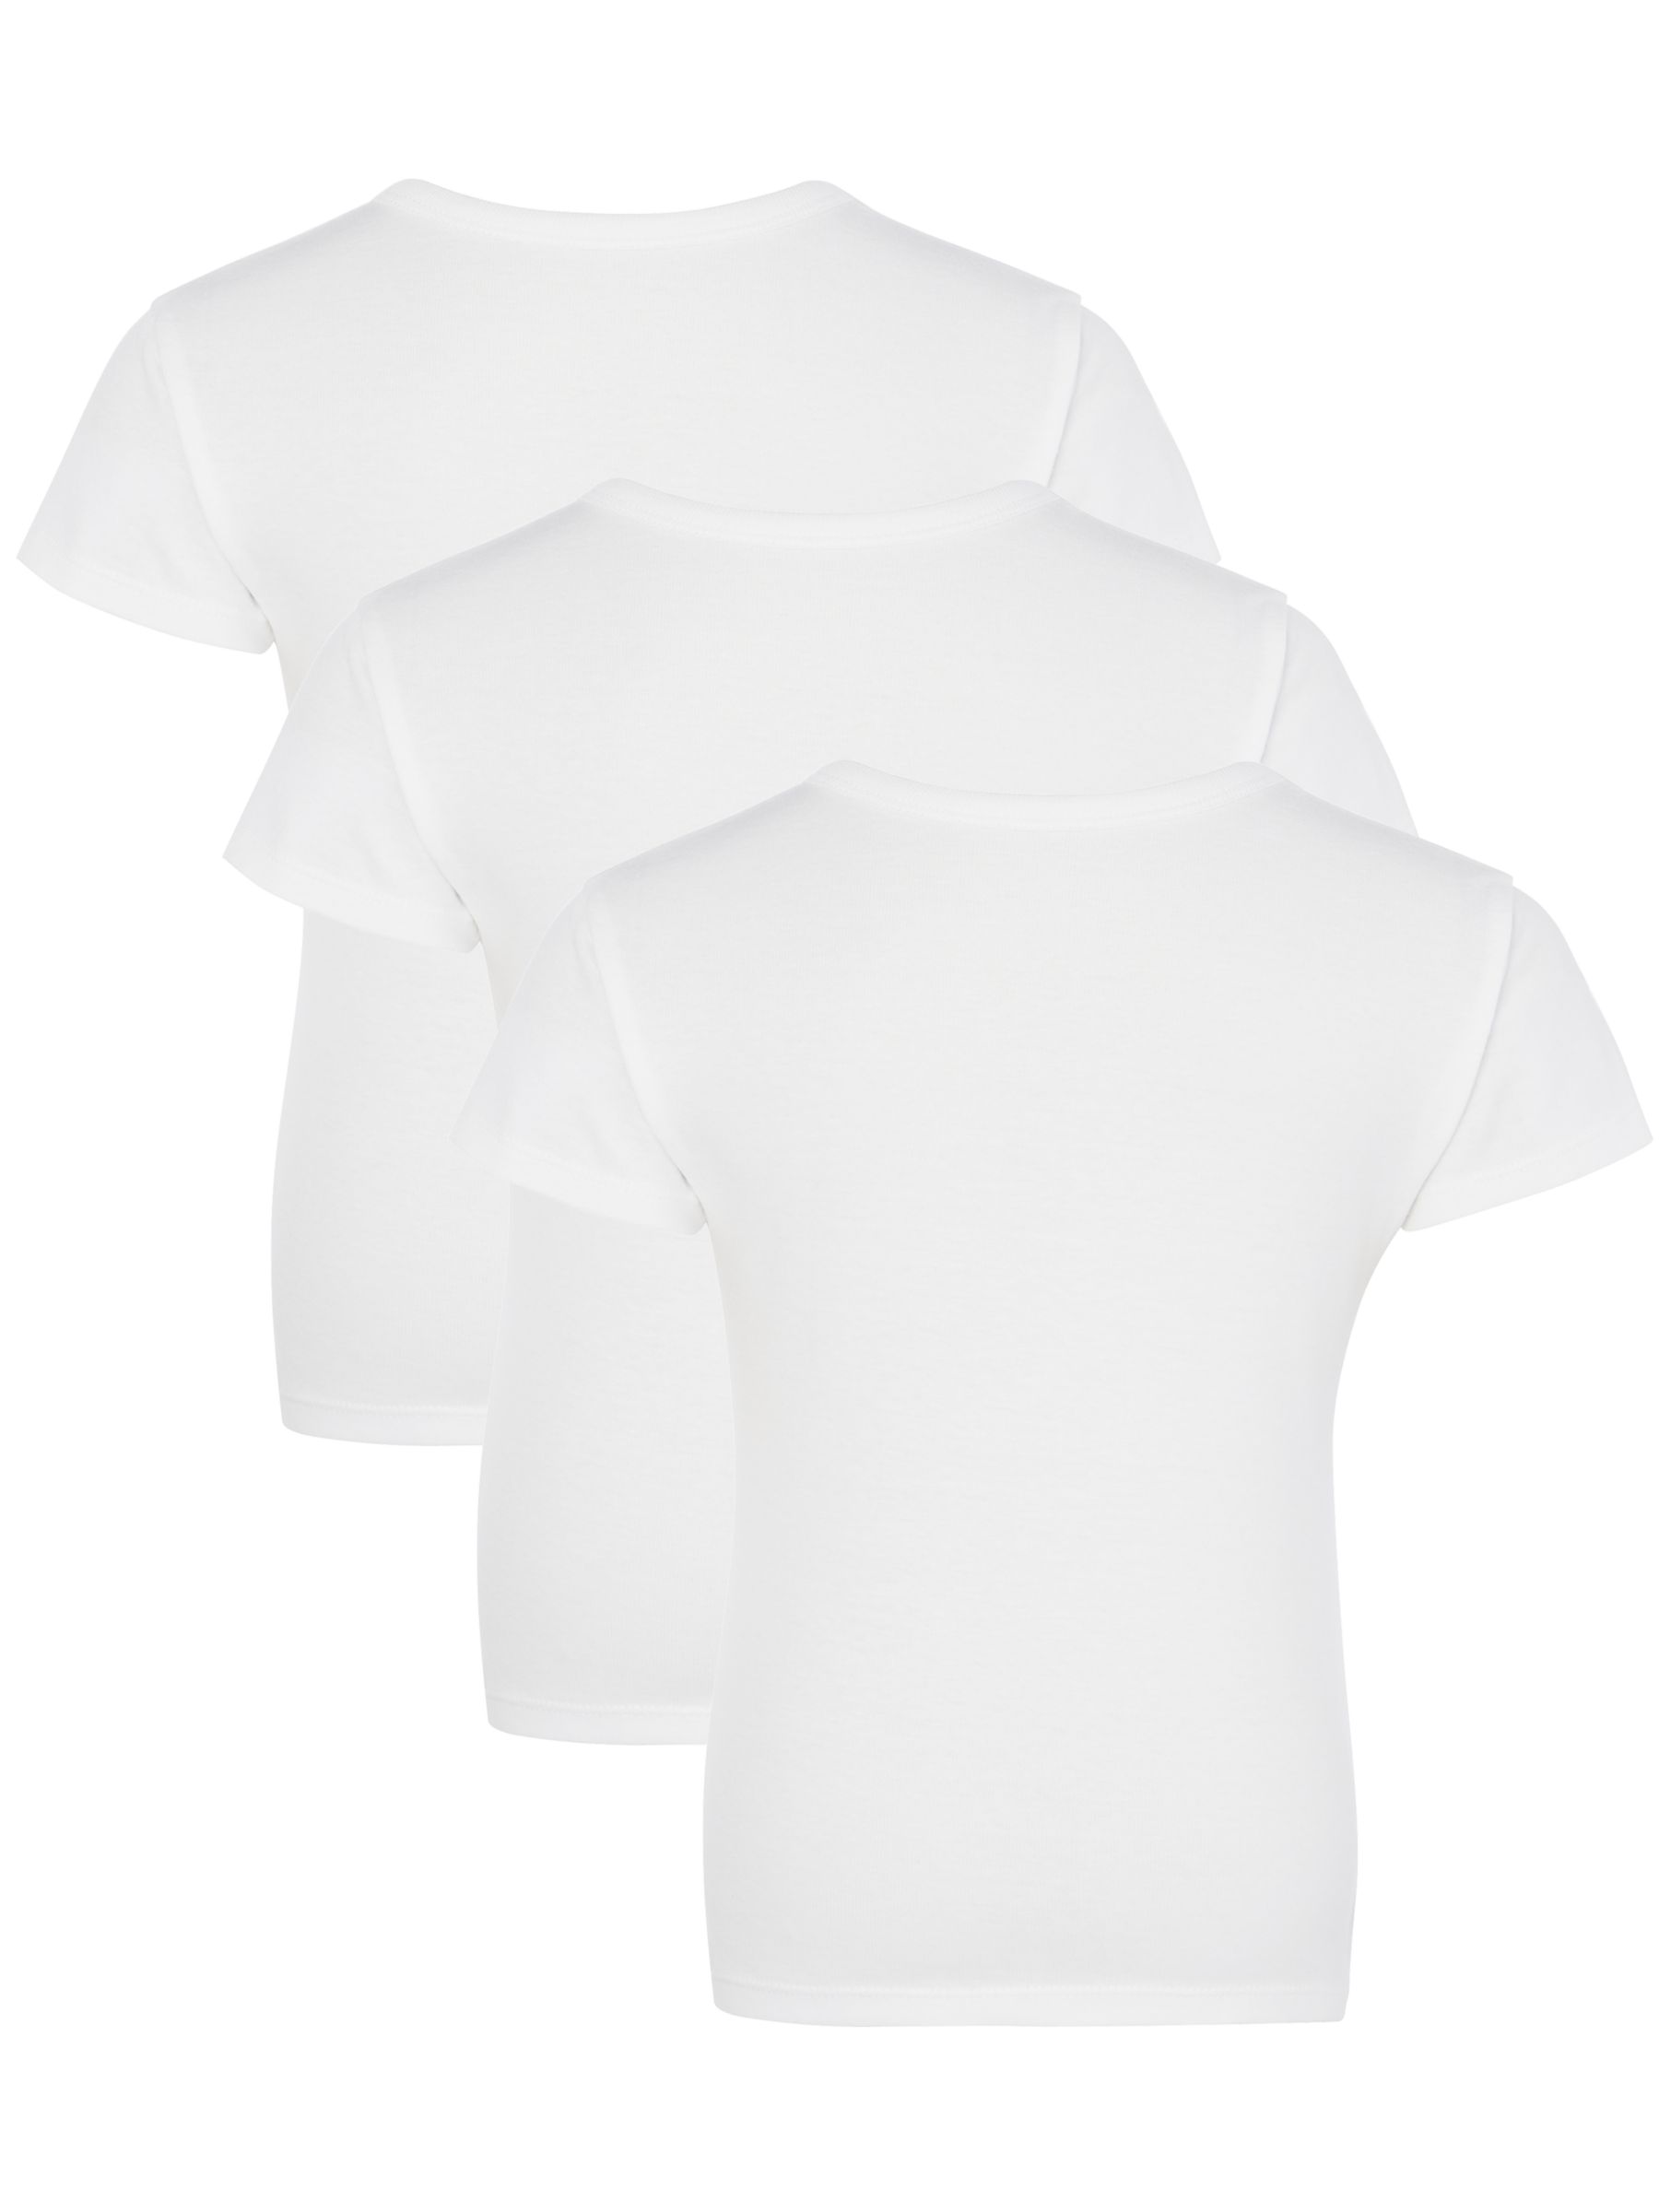 Buy John Lewis ANYDAY Kids' Short Sleeve T-Shirt Vest, Pack of 3, White Online at johnlewis.com